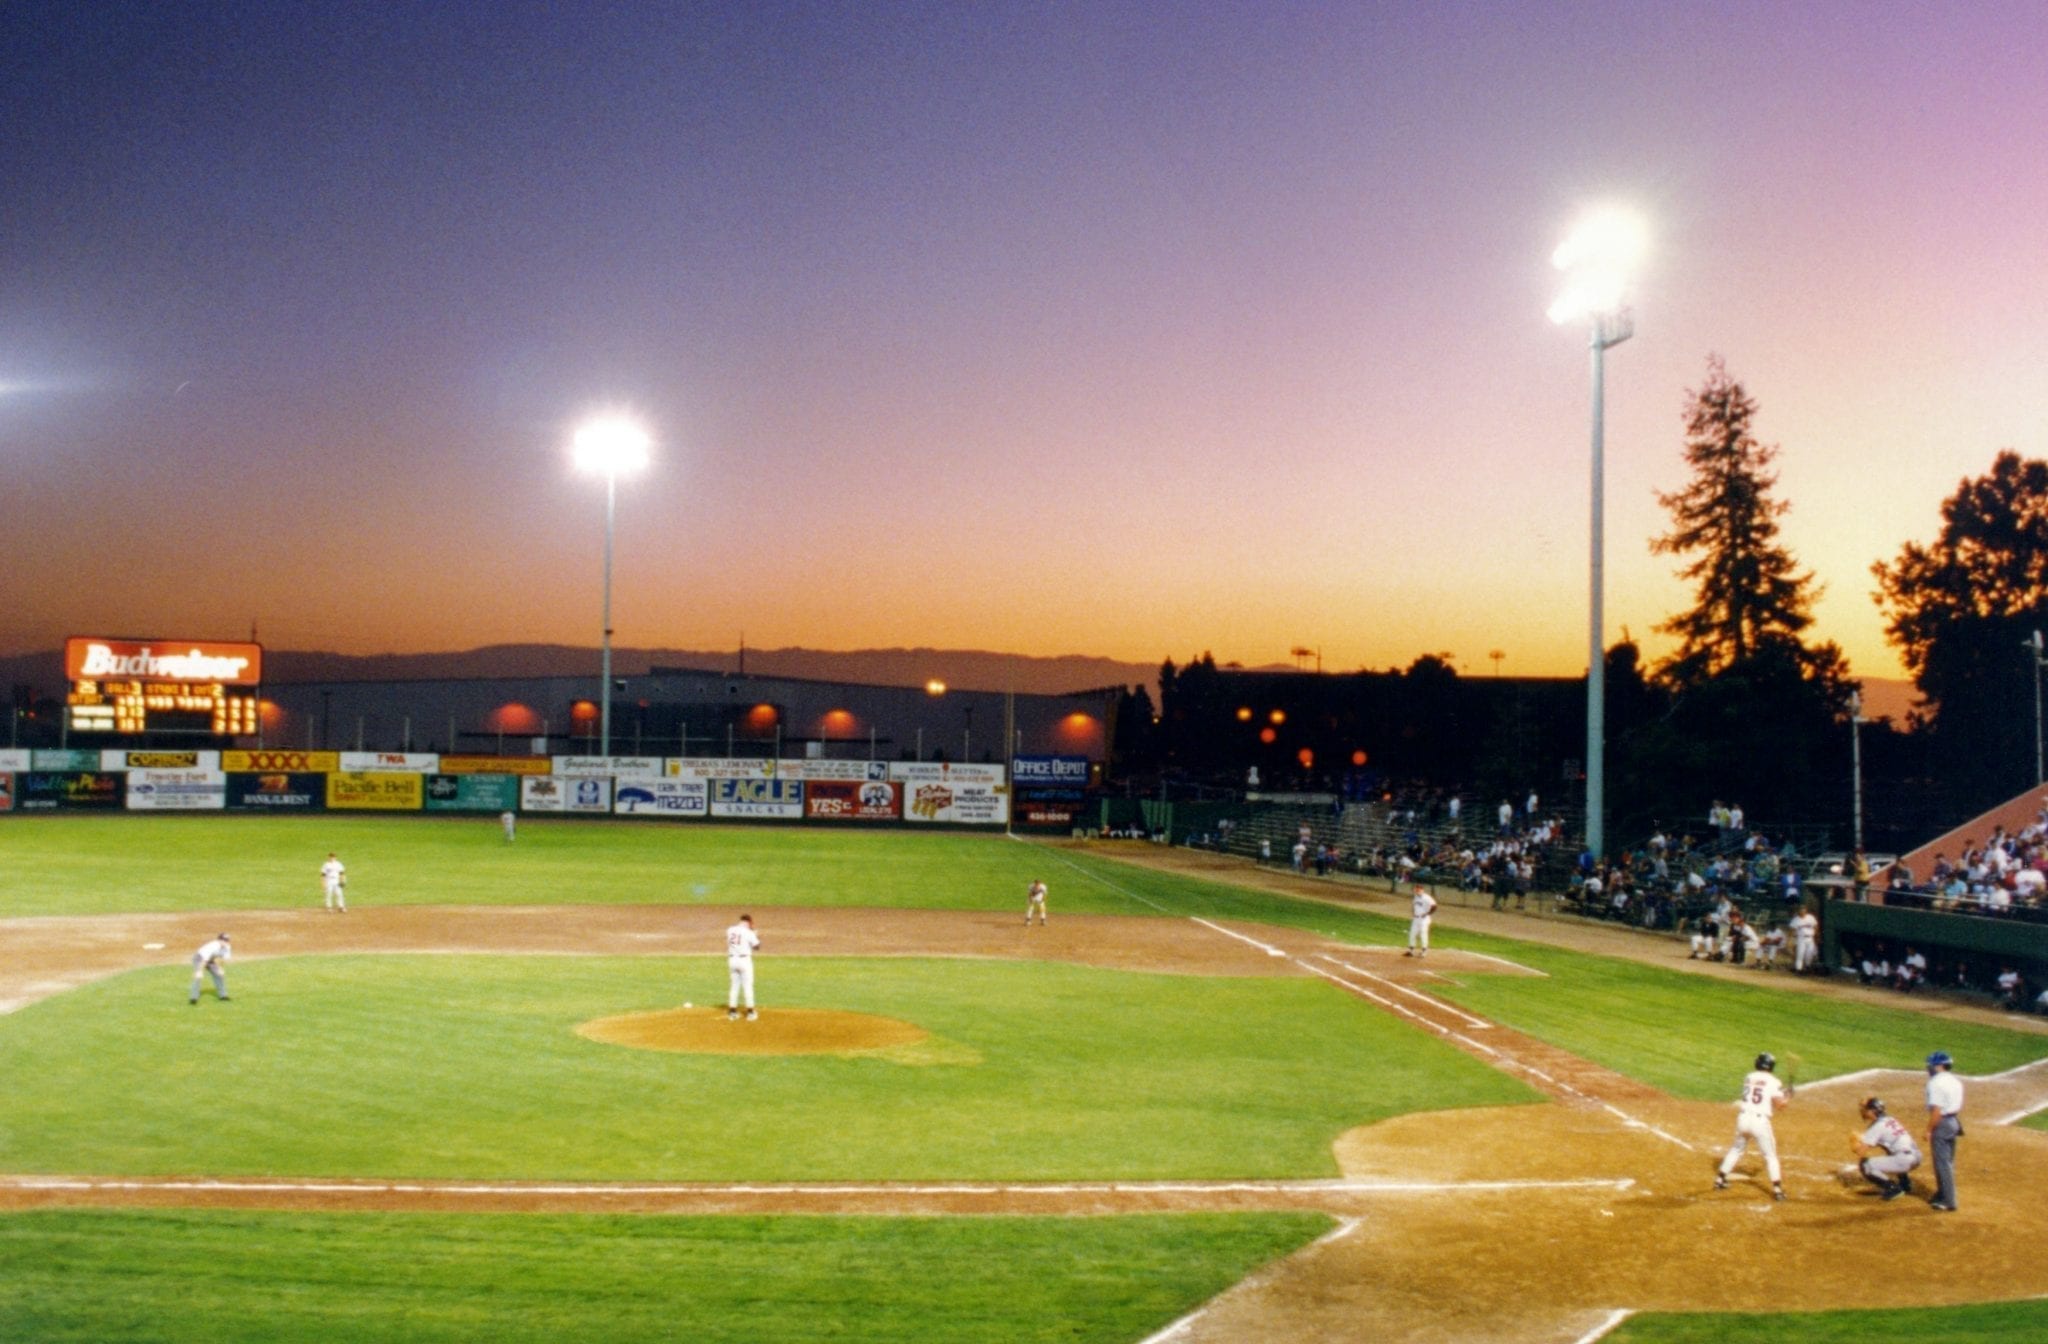 Class 'A' baseball, San Jose, CA, 1994; image by Rdikeman, CC-BY-SA-3.0, via Wikimedia Commons, no changes.